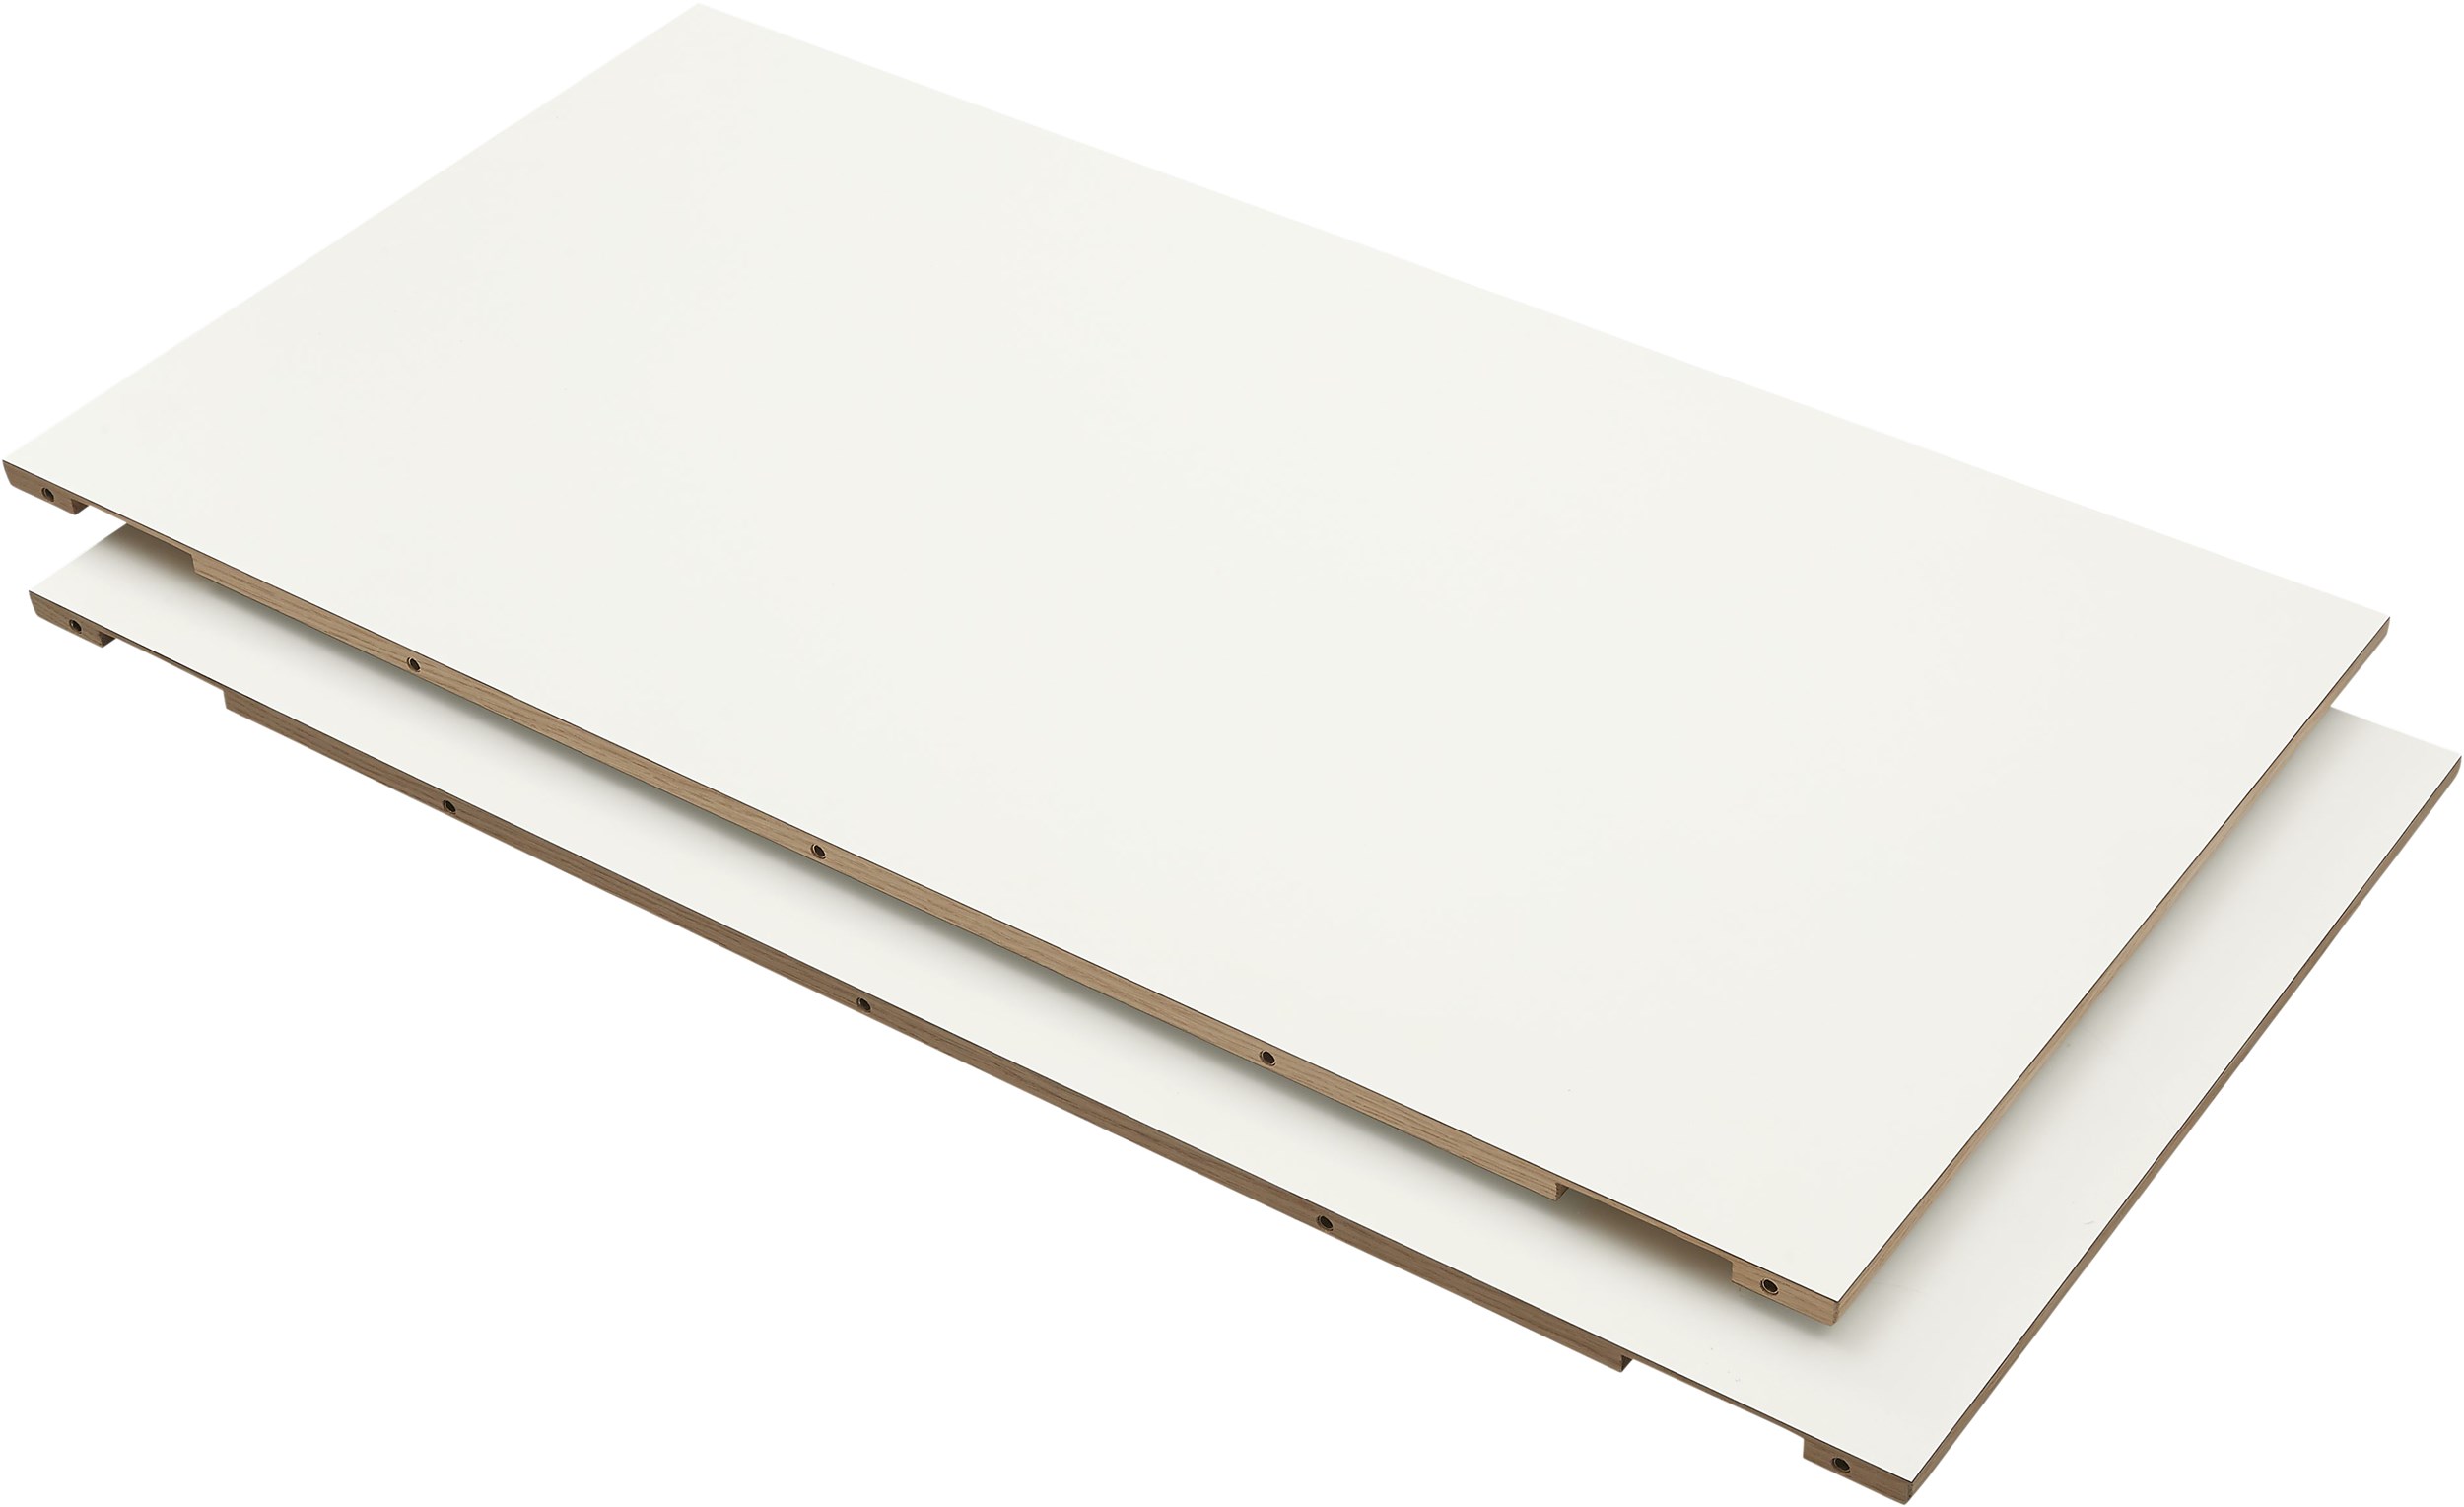 Edge Iläggsplatta 49 x 95 cm - 201 Bianco nanolaminat, kant i vitpigmenterad mattlackad ek och 2 st